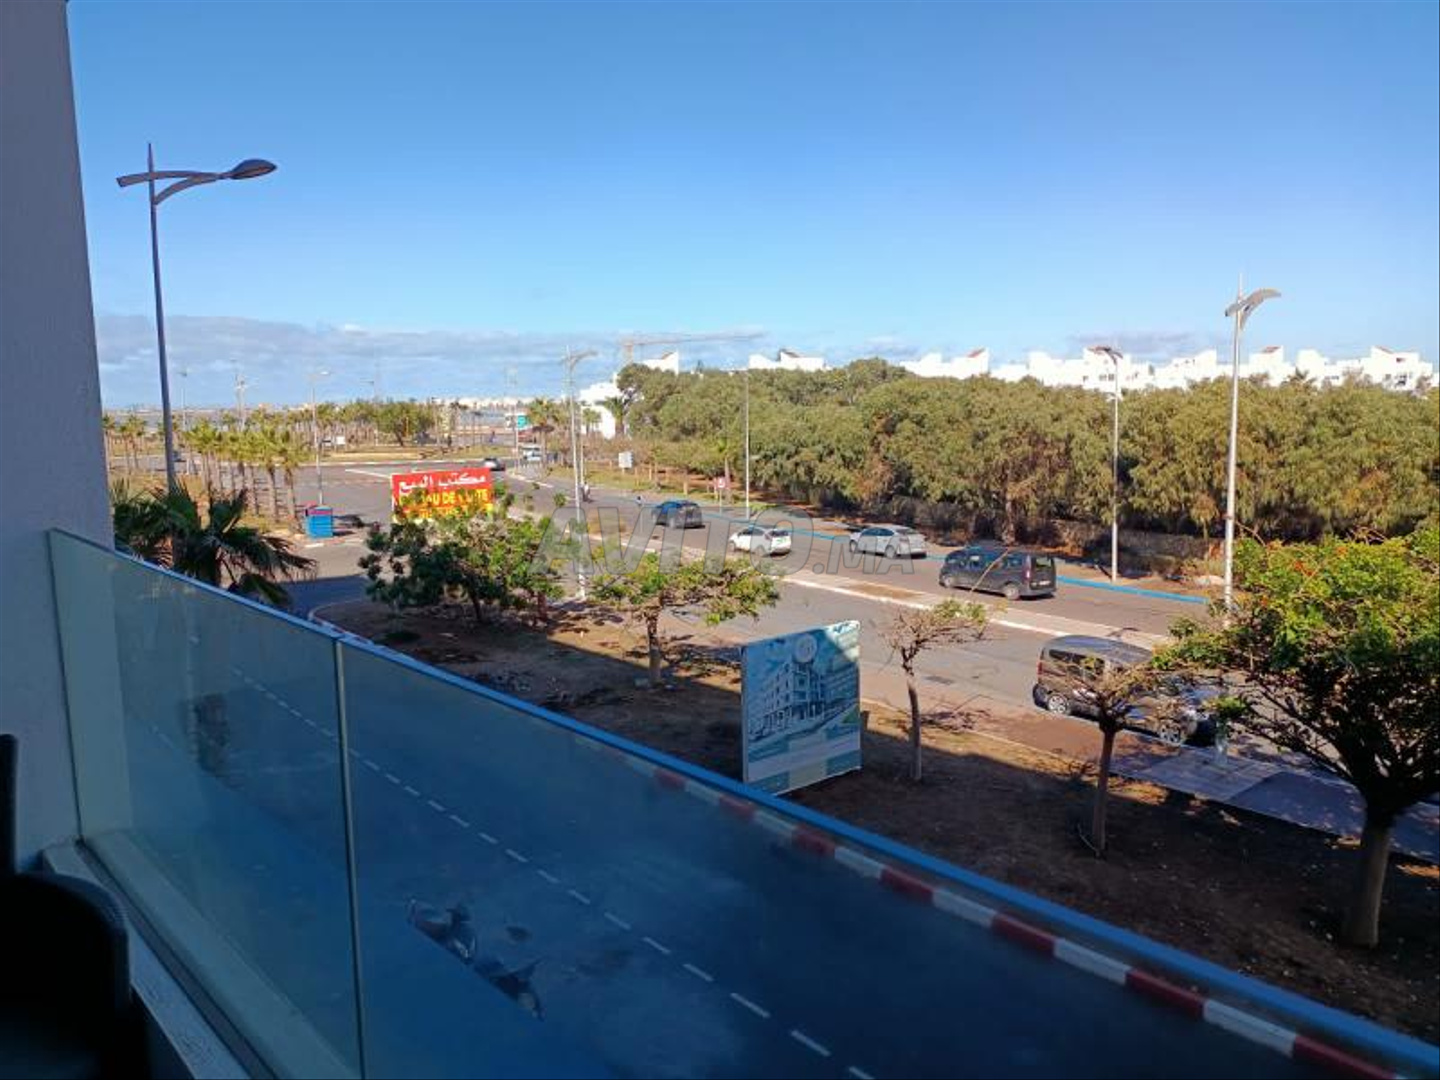 Essaouira M’ramer Location vacances Appart. 2 pièces appartements 